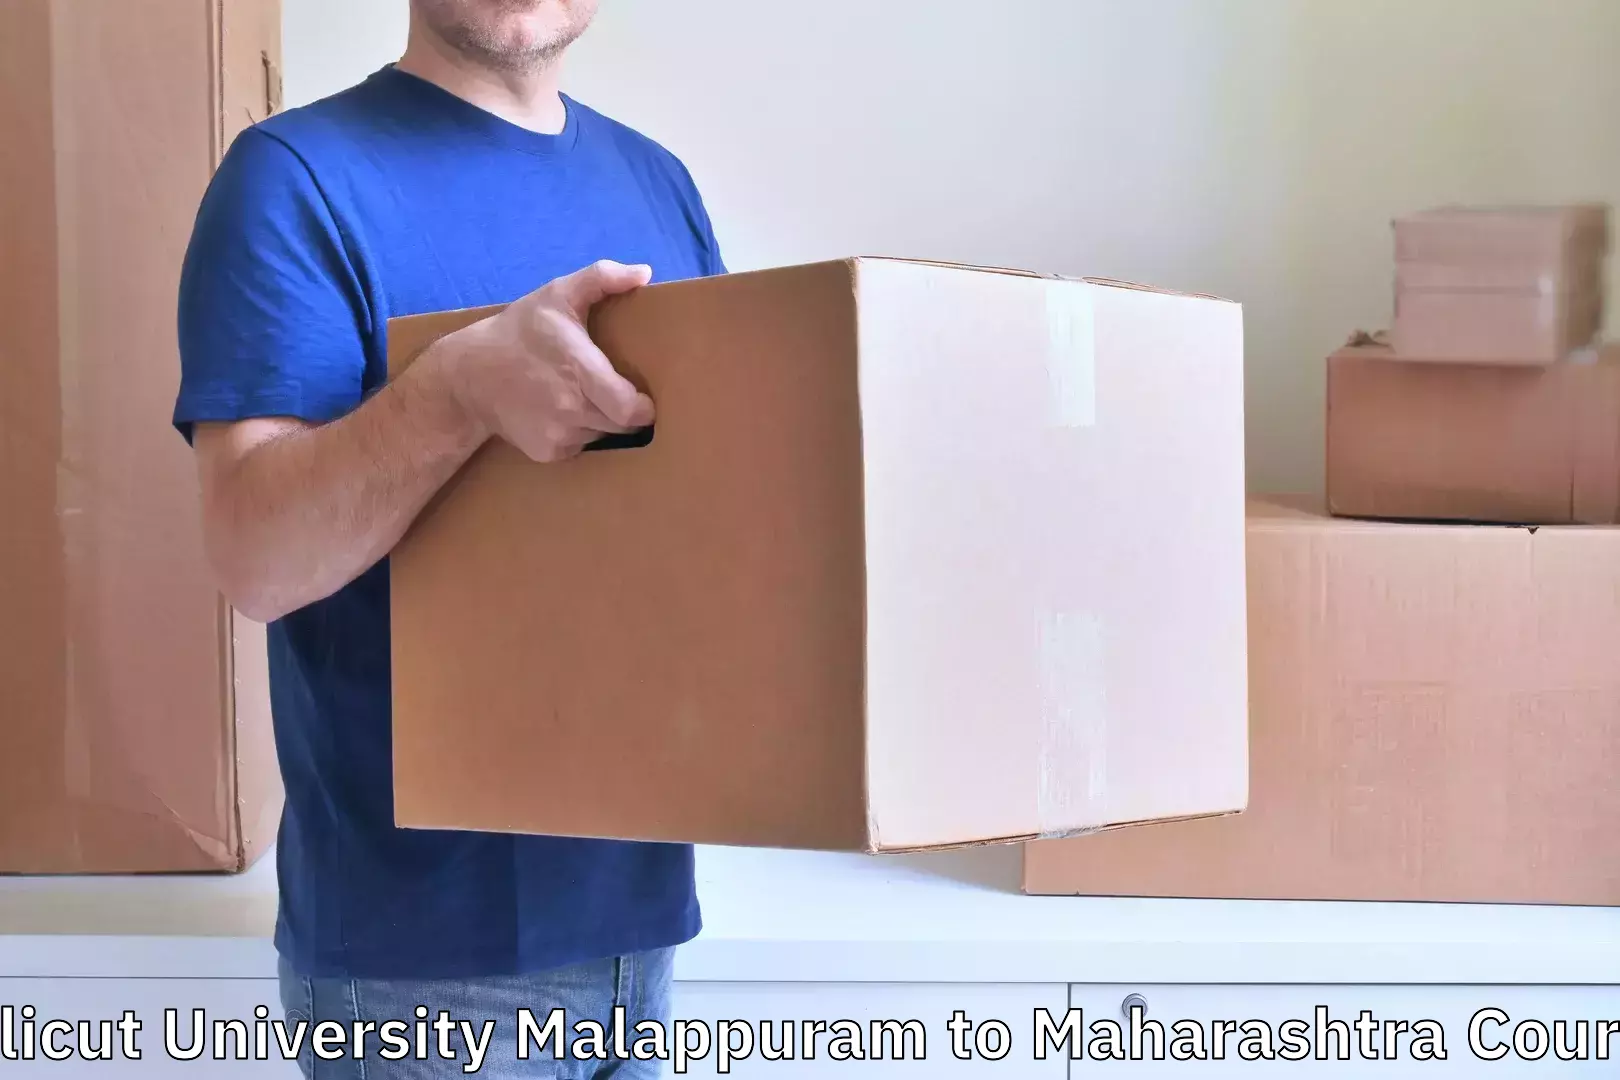 Online luggage shipping booking Calicut University Malappuram to Worli